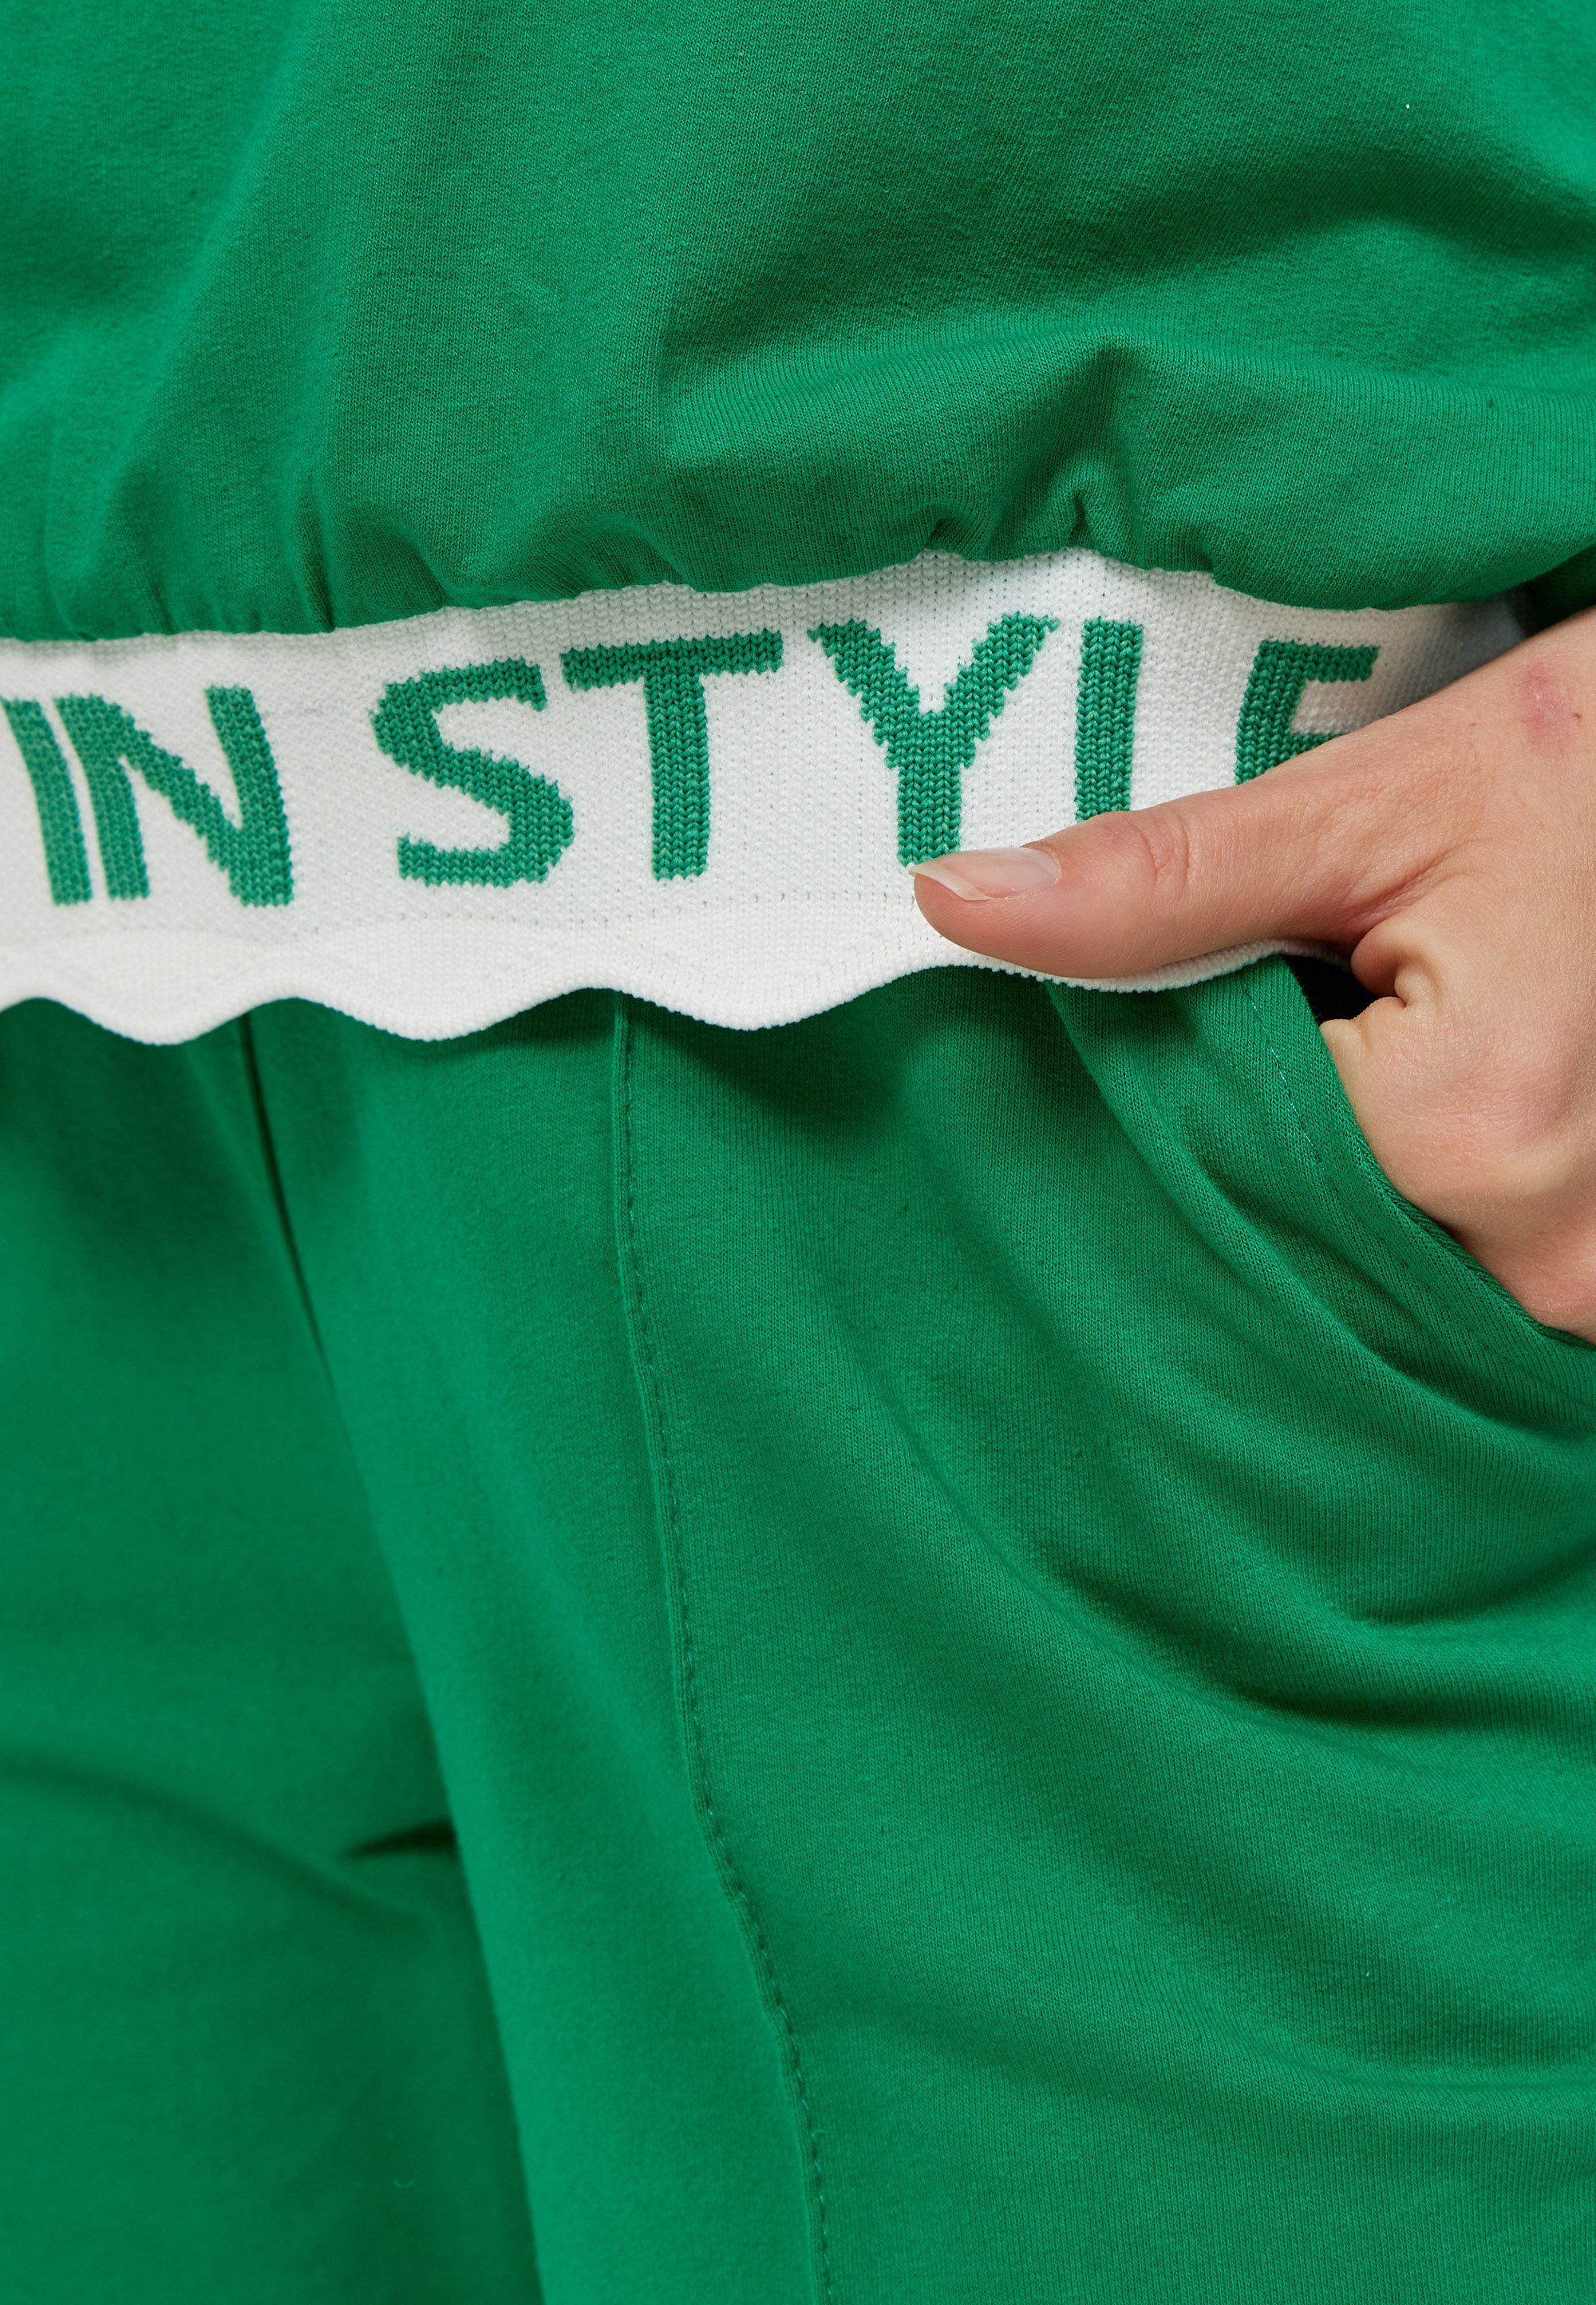 stylishem T-Shirt grün Decay Schriftzug mit